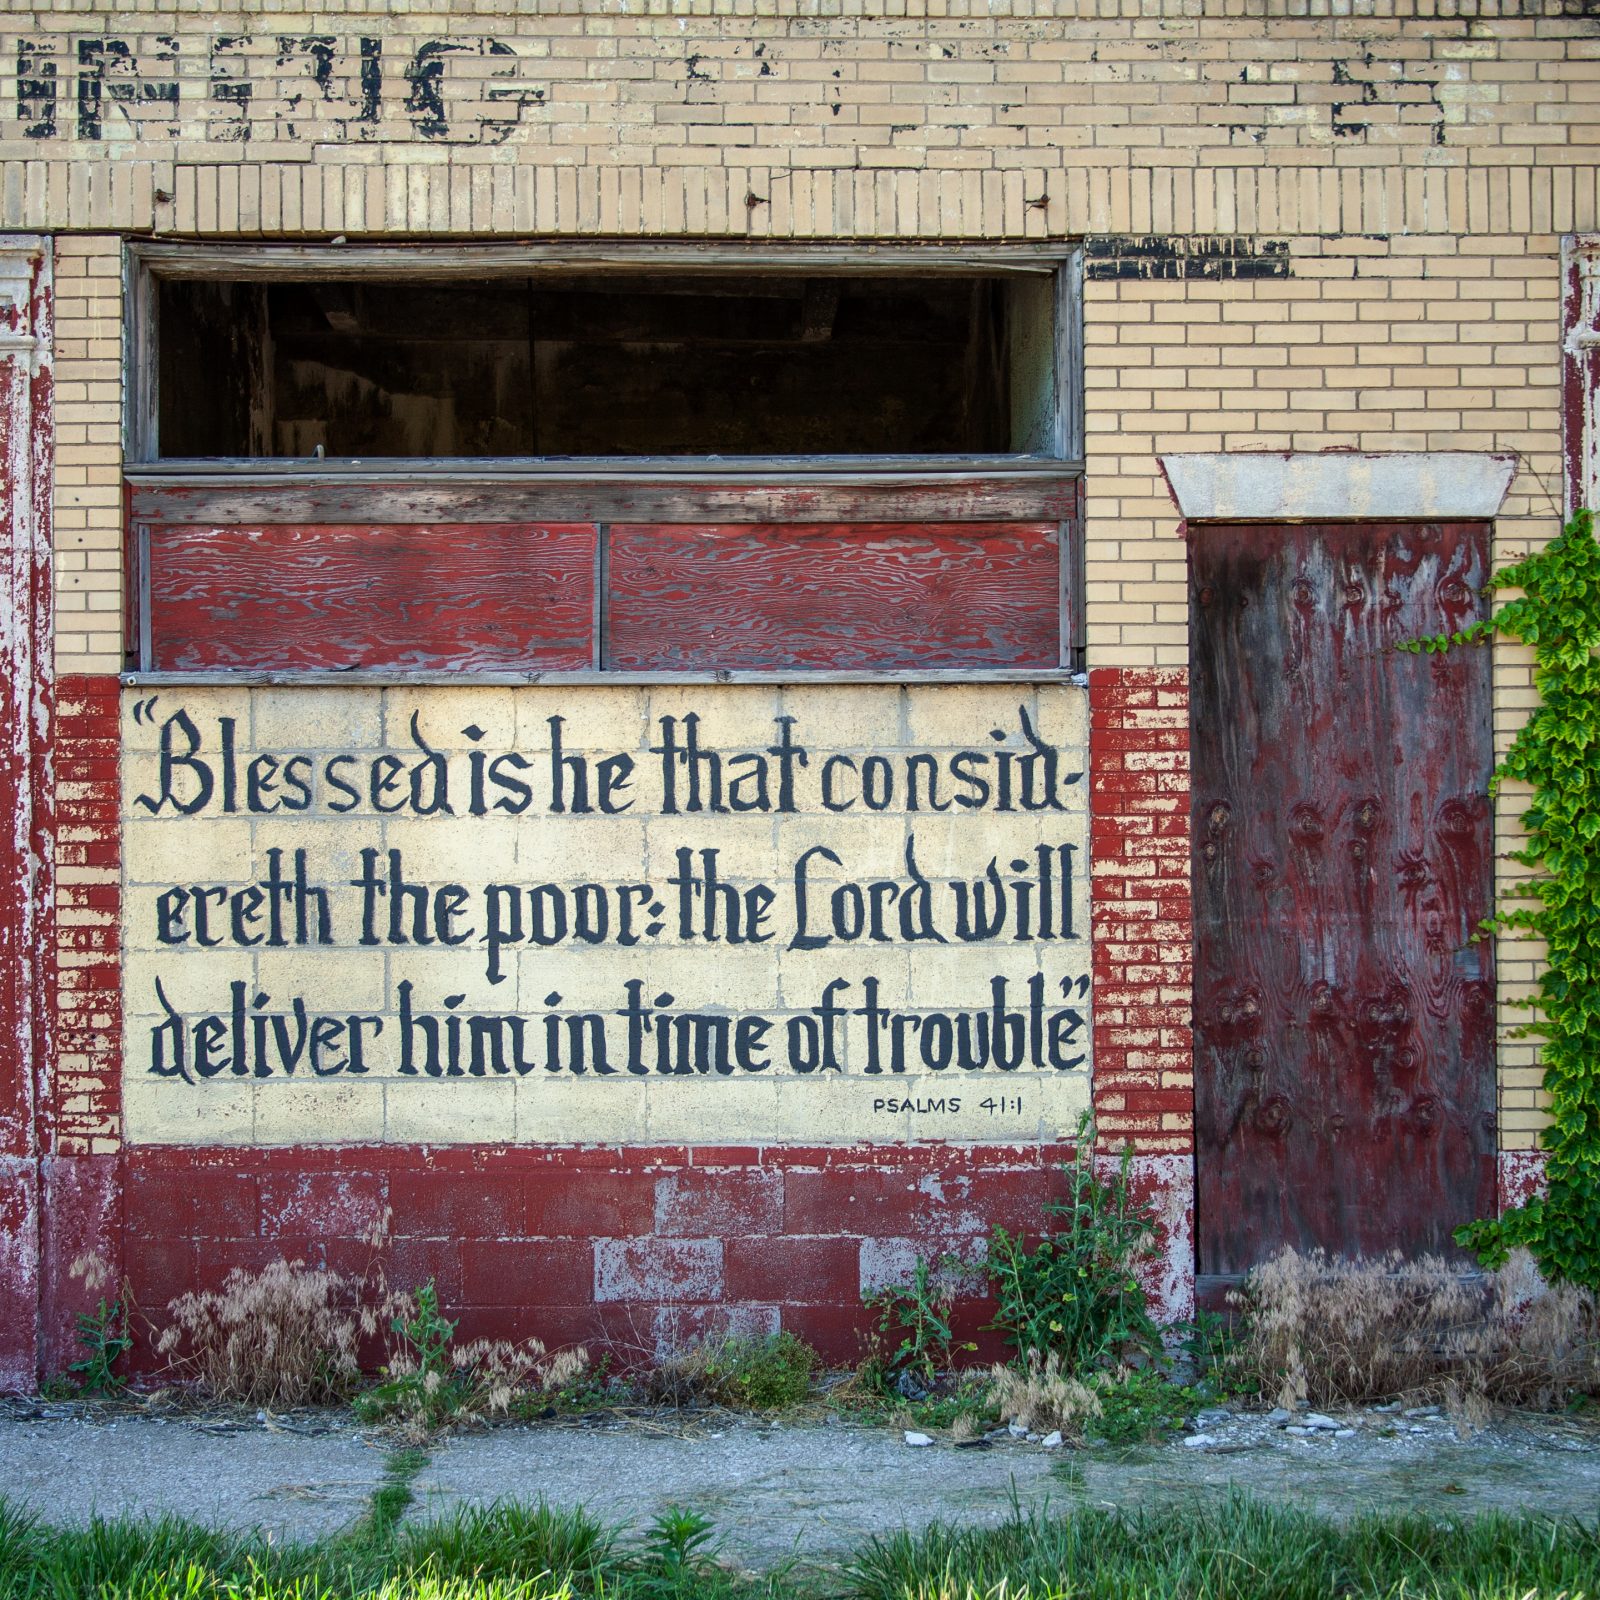 Bible verses on walls. Detroit, Michigan.